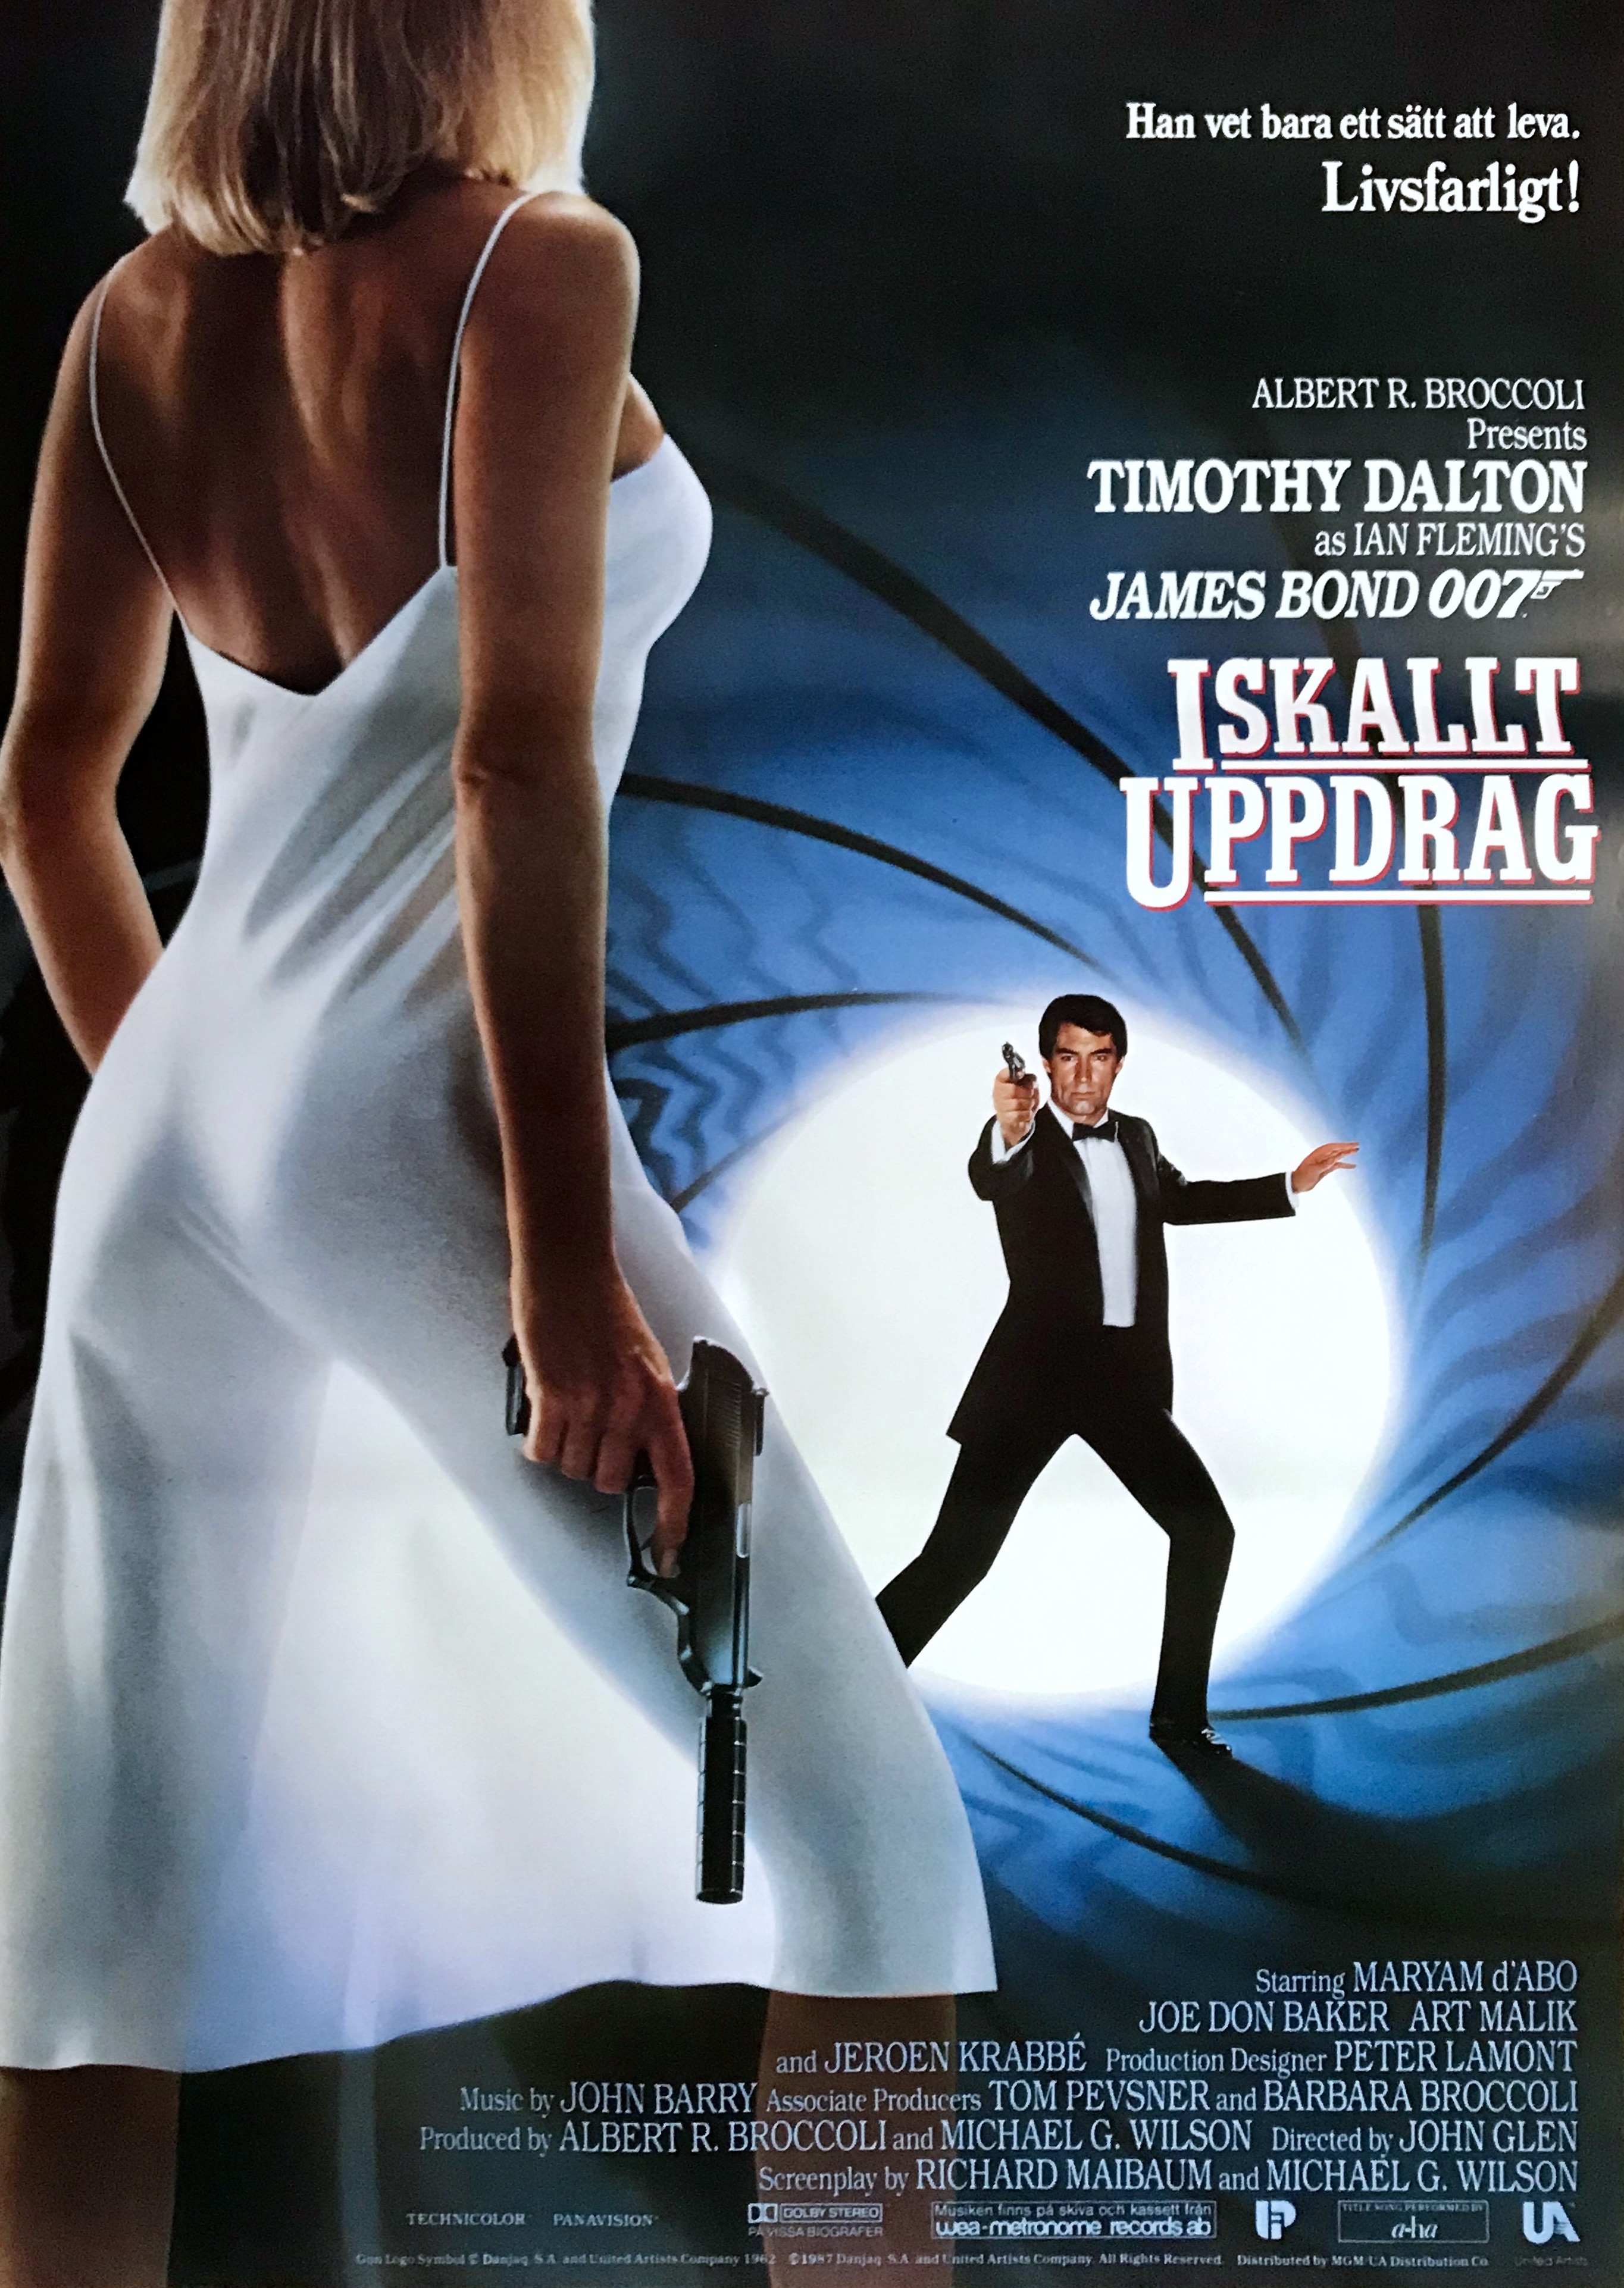 Nostalgipalatset - JAMES BOND 007 - THE LIVING DAYLIGHTS (1987)